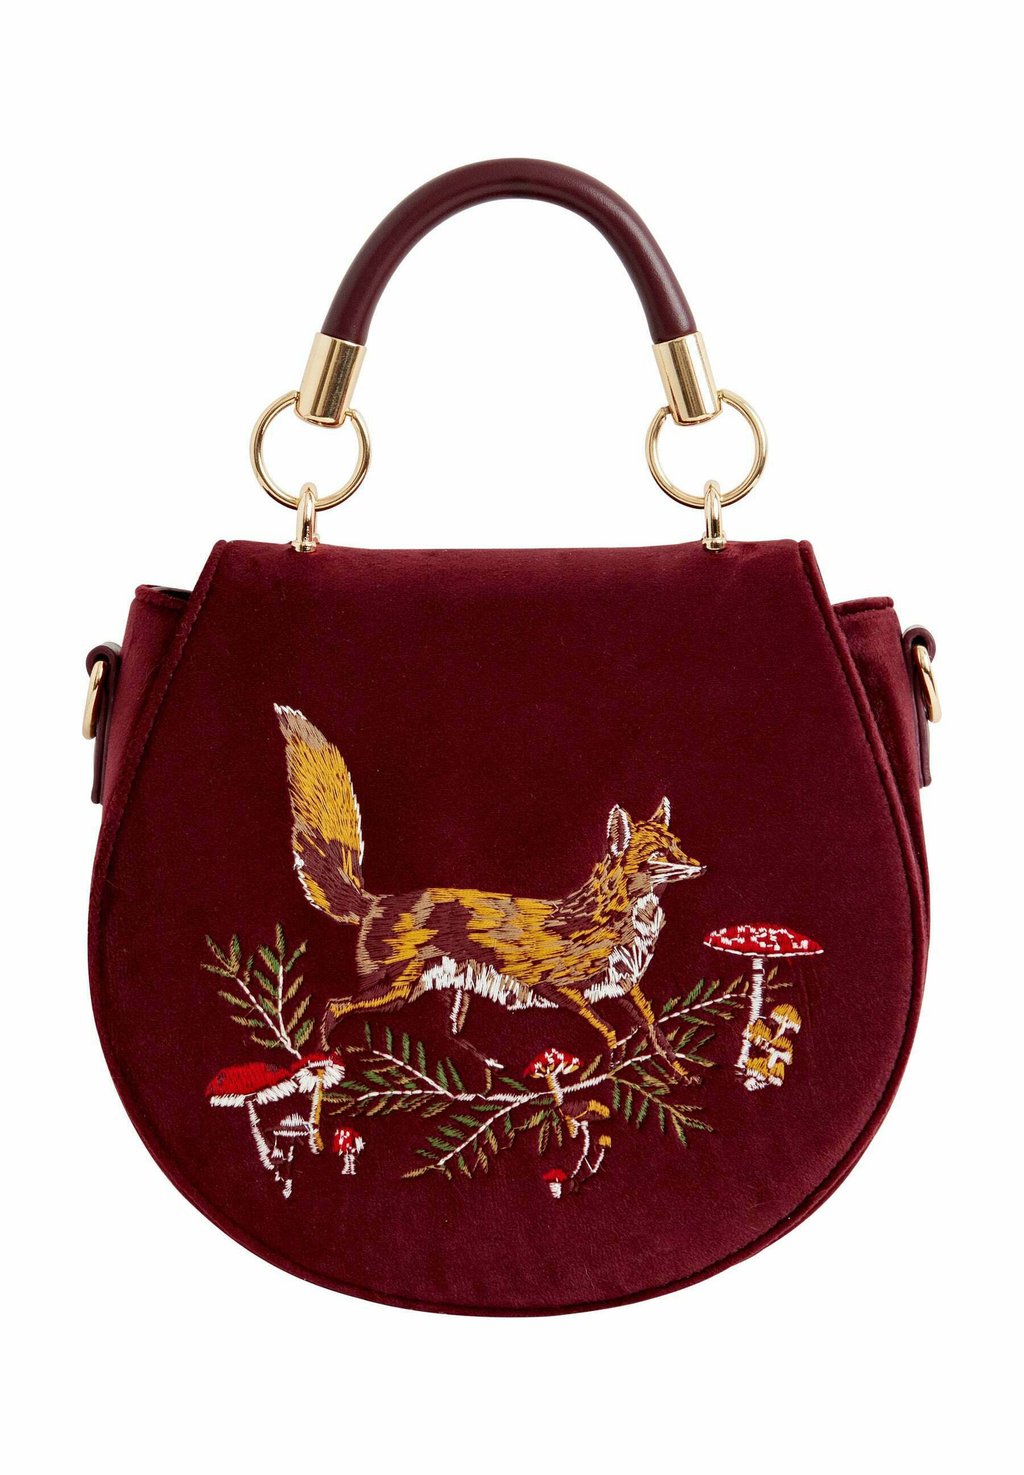 Сумка FOX MUSHROOM EMBROIDERED SADDLE-REDCURRANT FABLE ENGLAND, цвет red сумка fox mushroom embroidered saddle redcurrant fable england цвет red